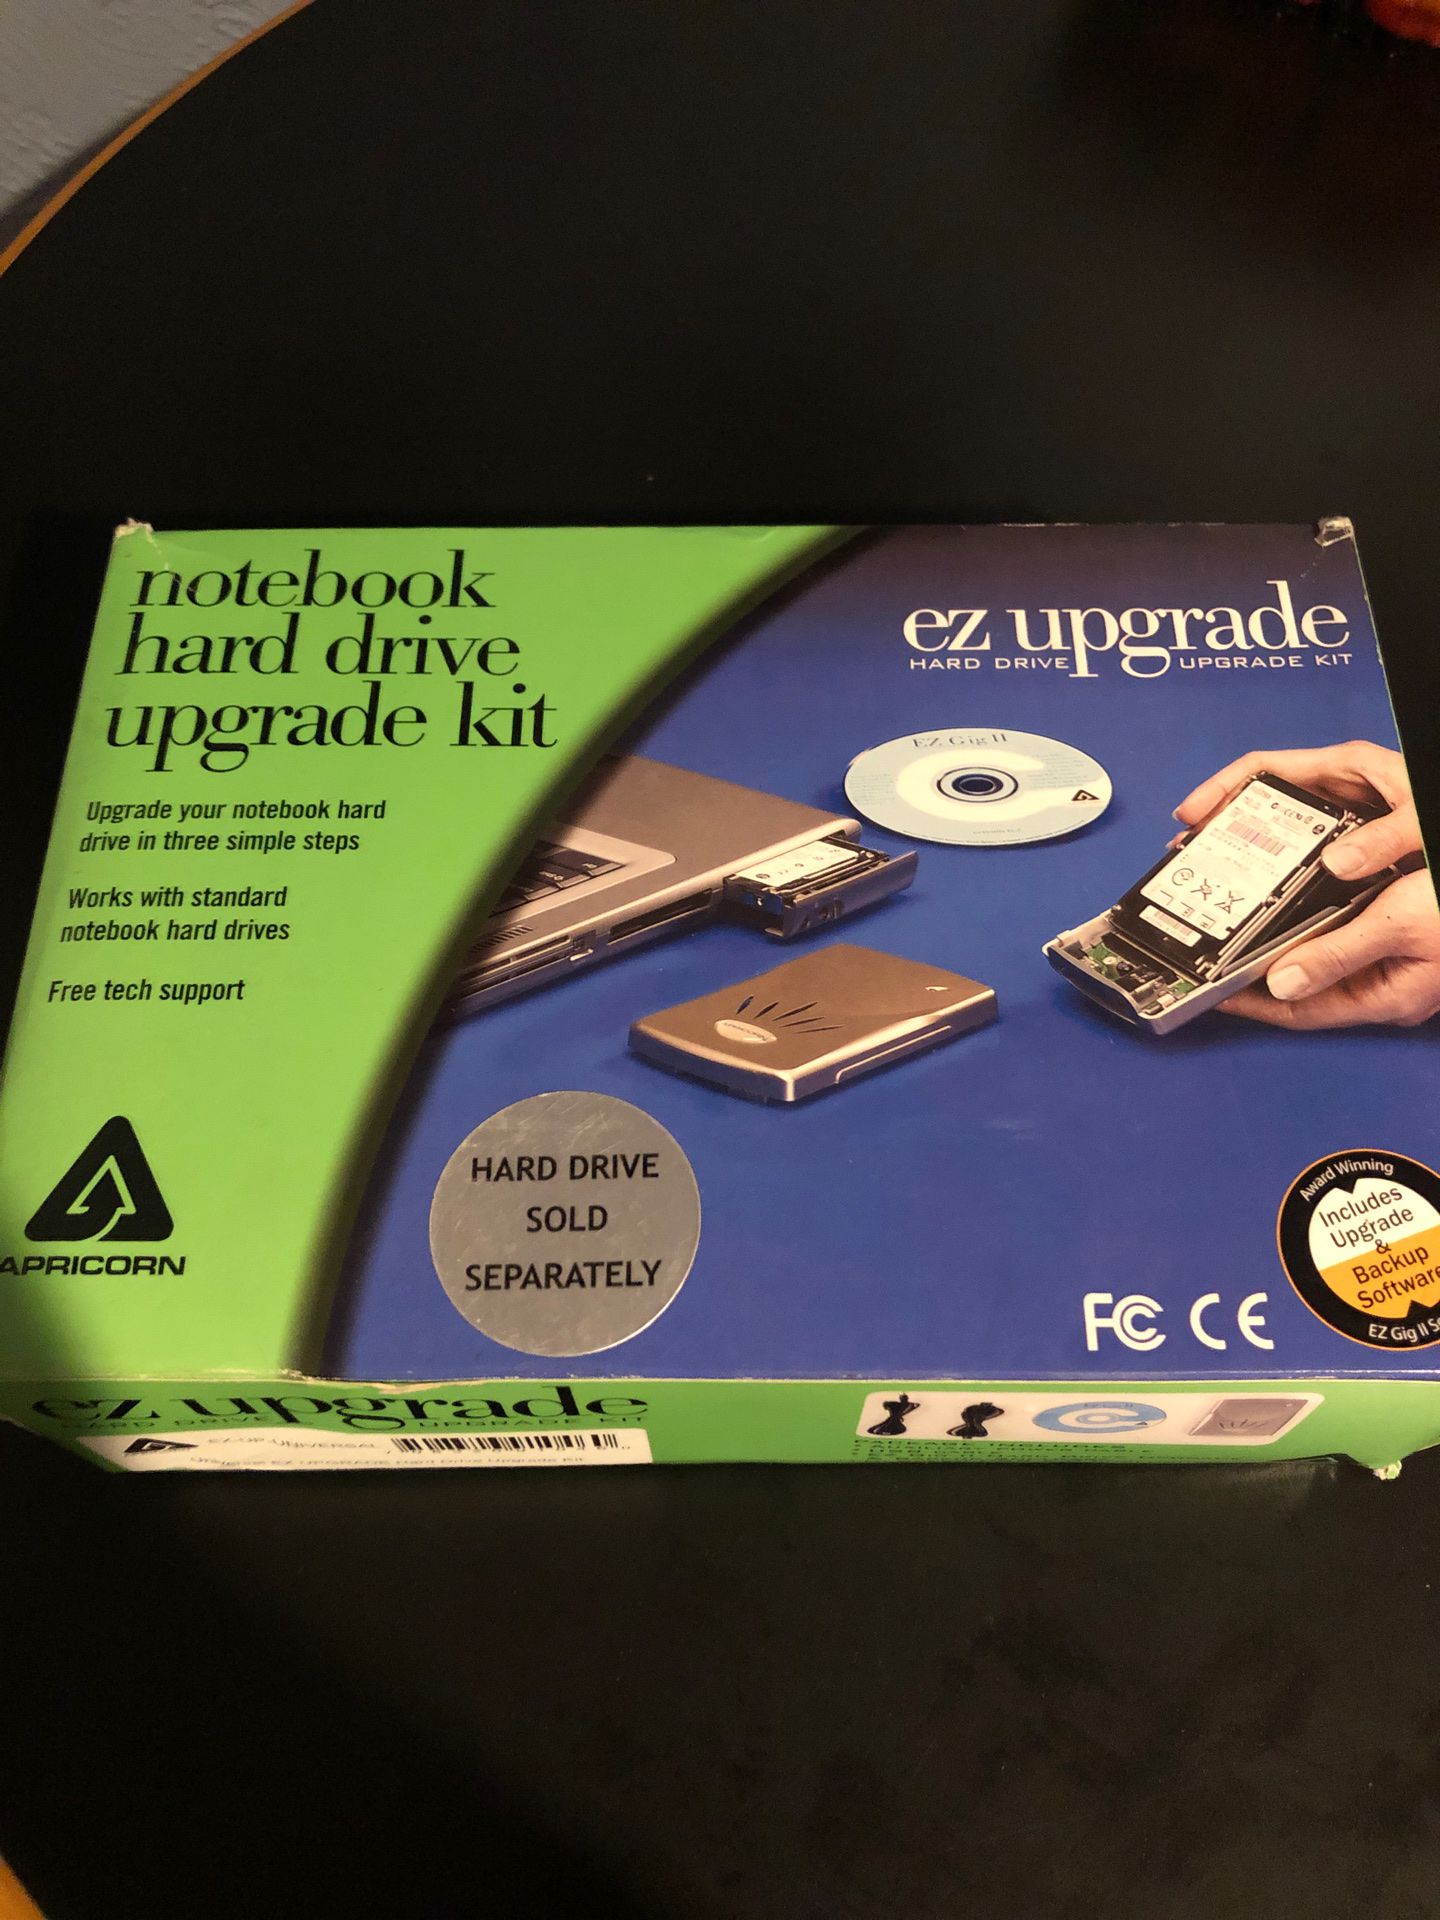 Ez upgrade hard drive upgrade kit Apricorn